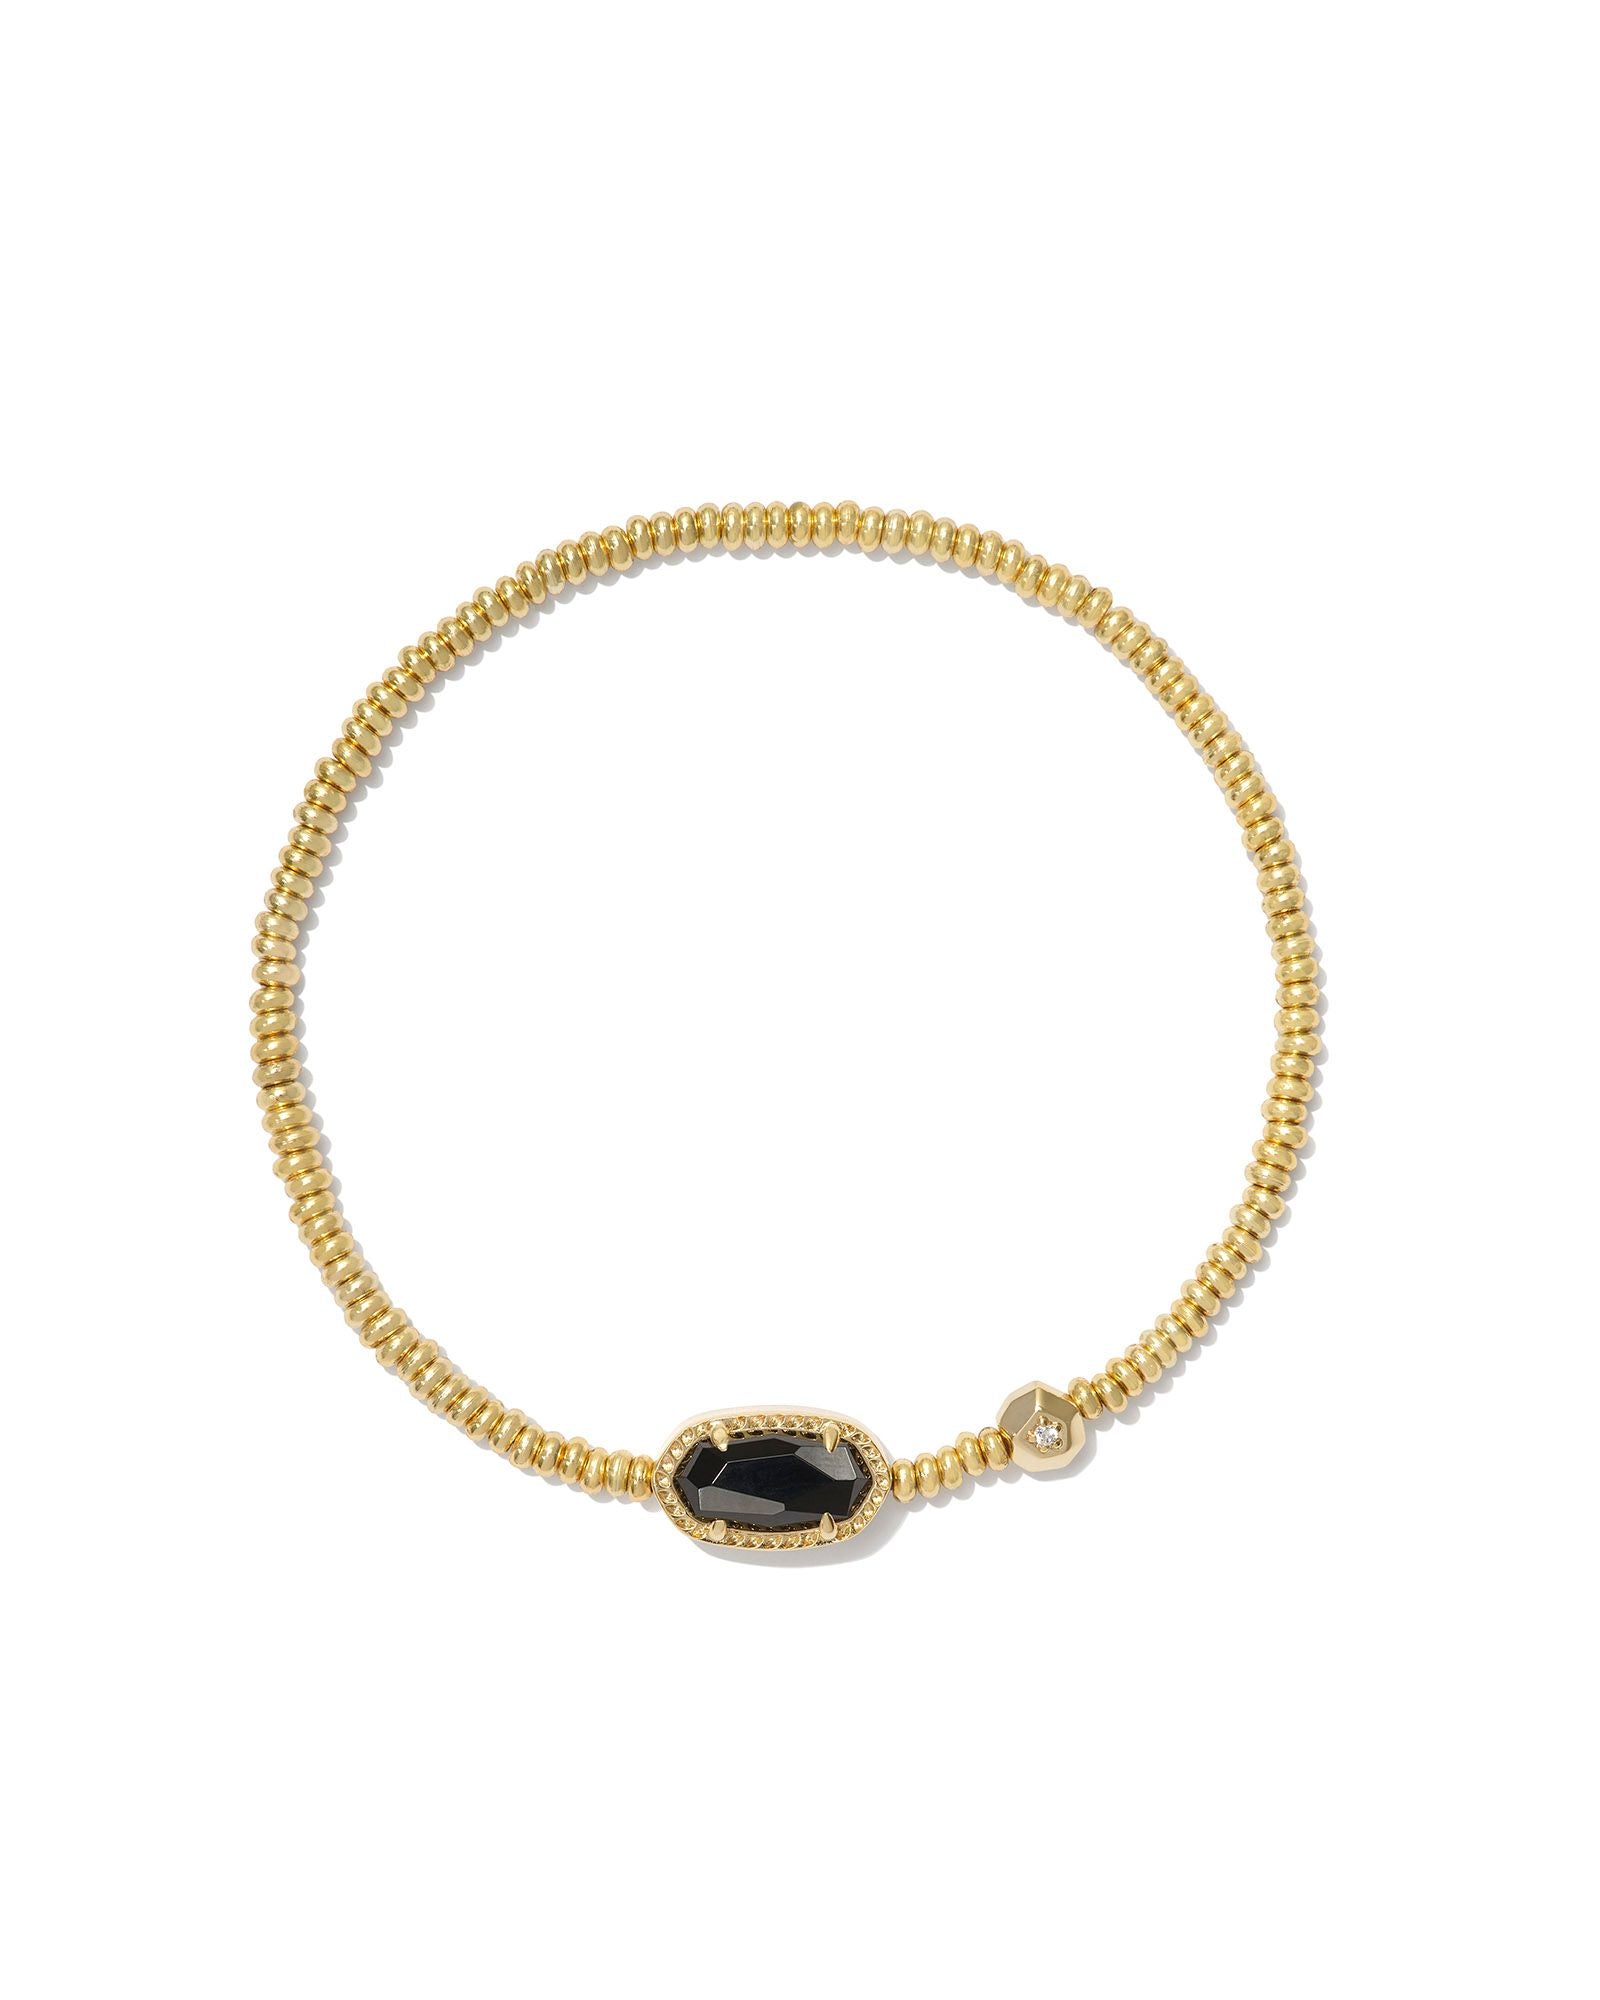 Grayson Stretch Bracelet in Gold Black Agate